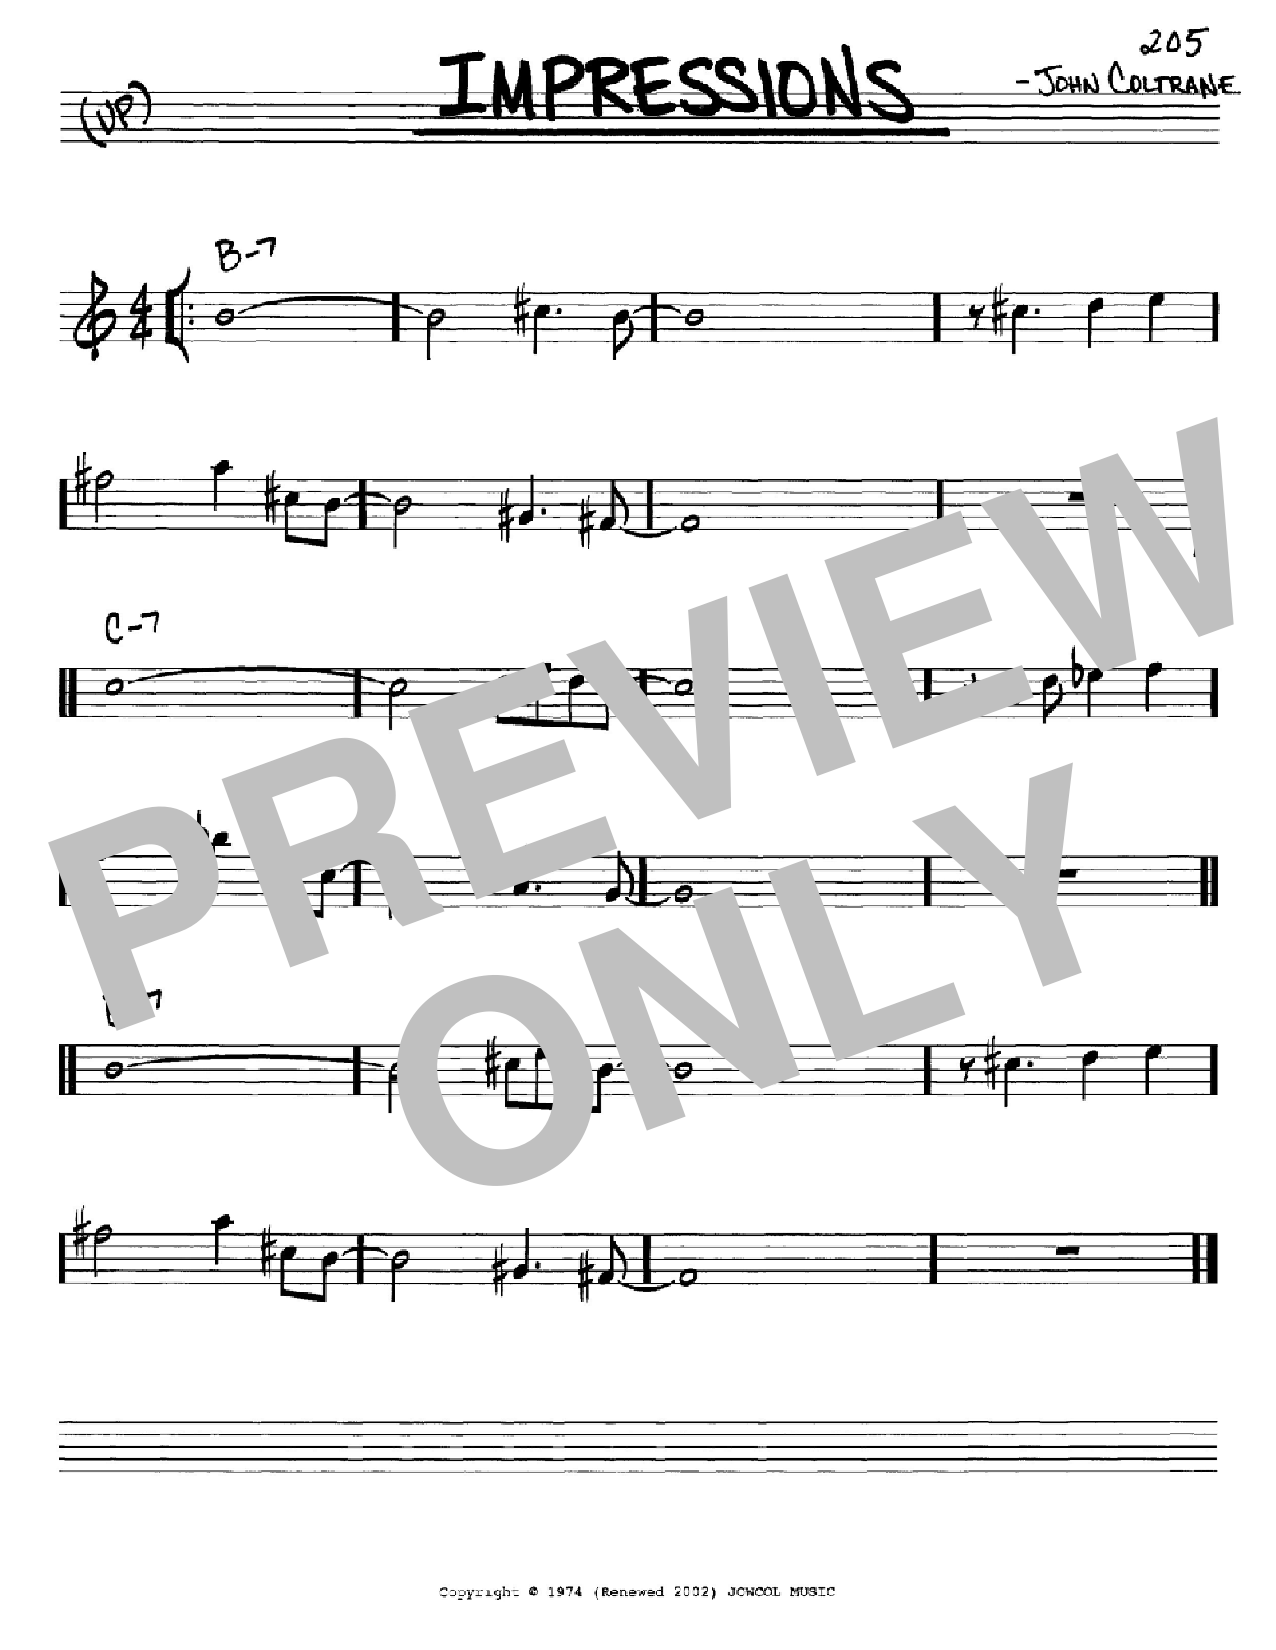 Download John Coltrane Impressions Sheet Music